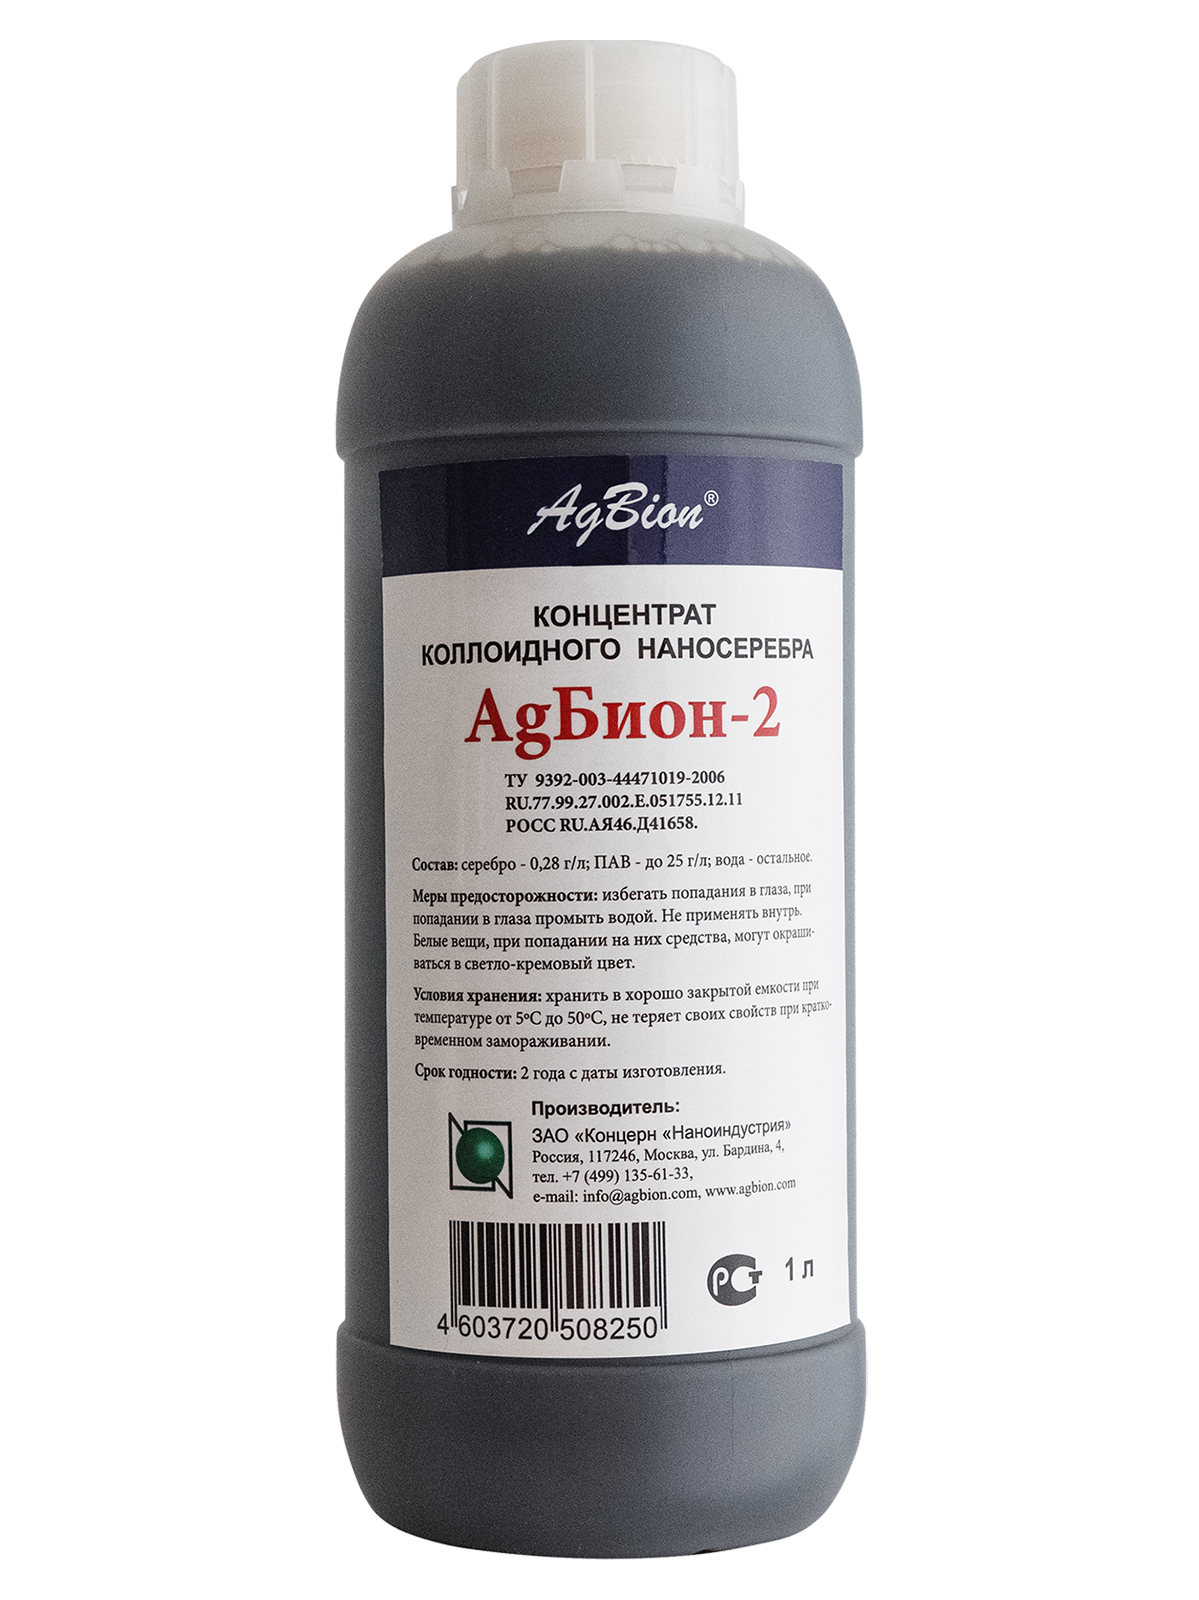 Дезинфицирующее средство на основе наносеребра AgБион-2